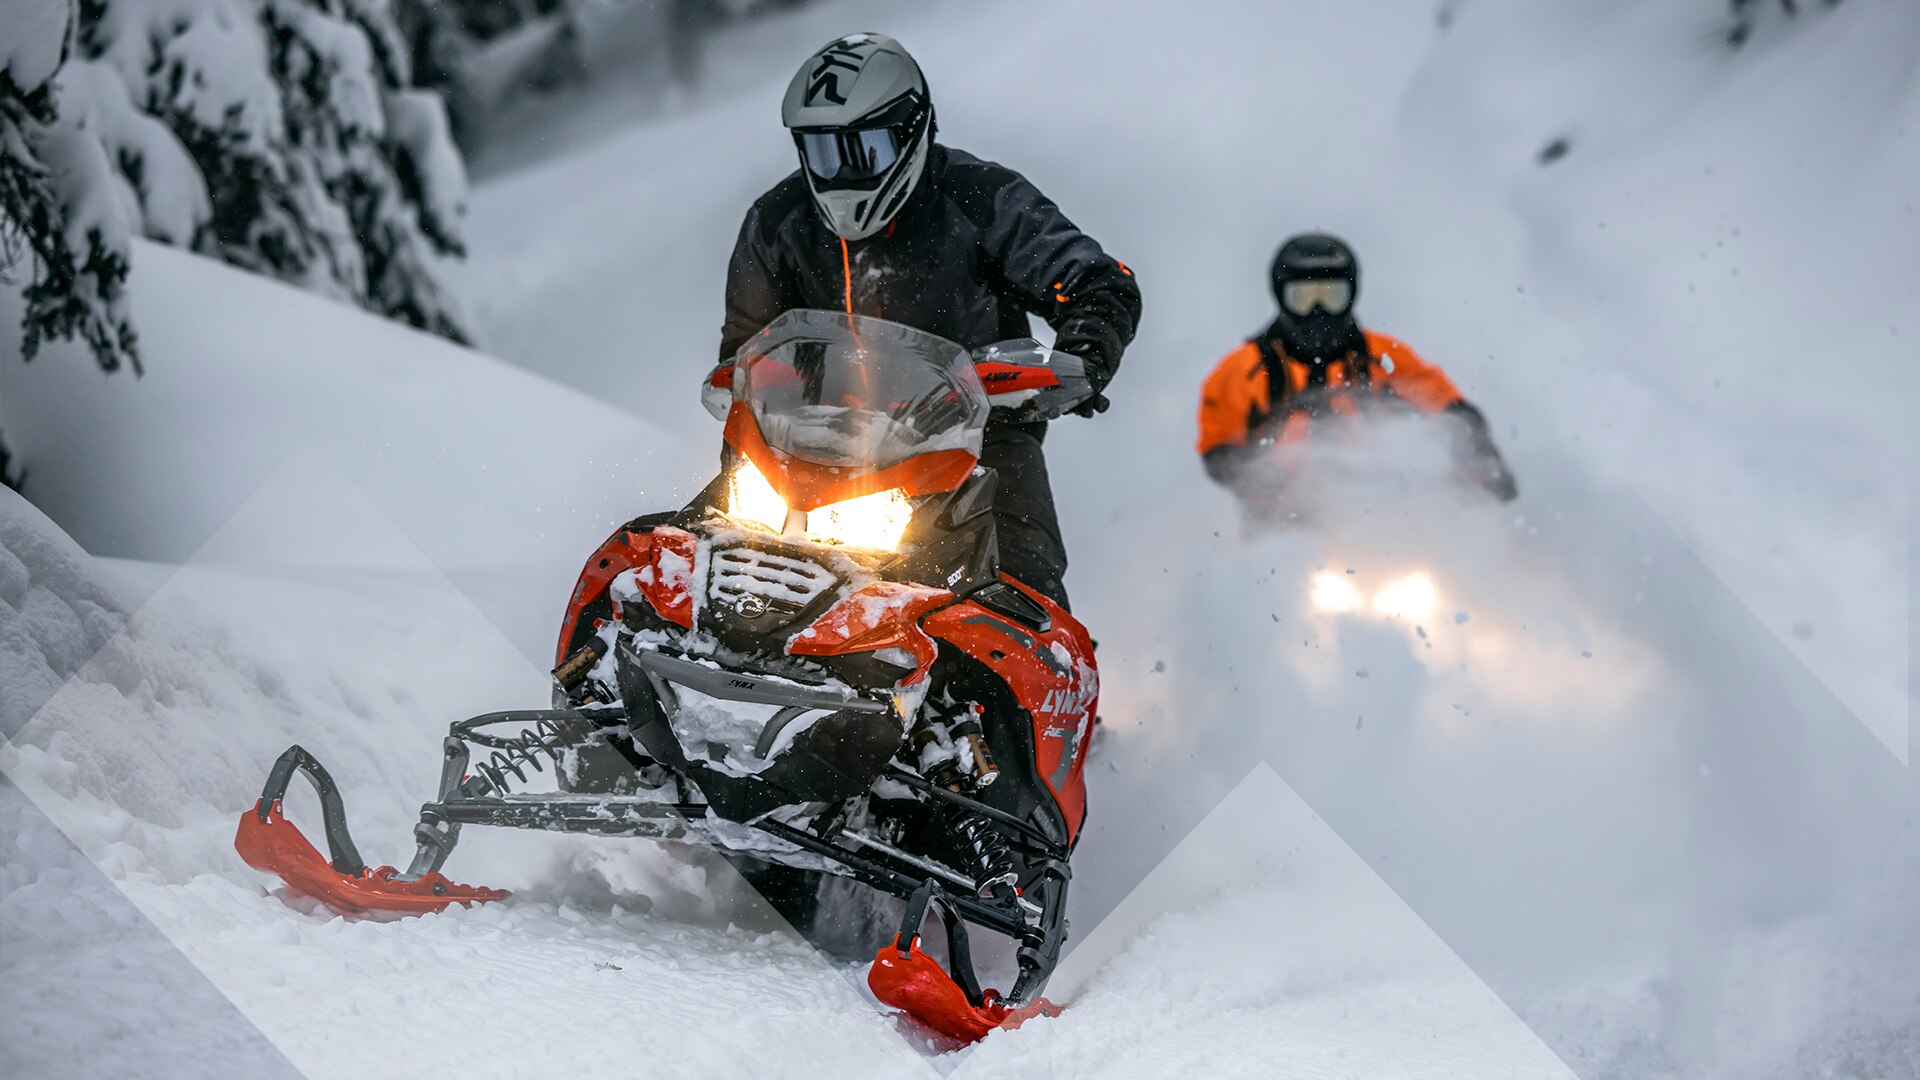 Two riders dashing through snow on their 2023 Lynx snowmobile